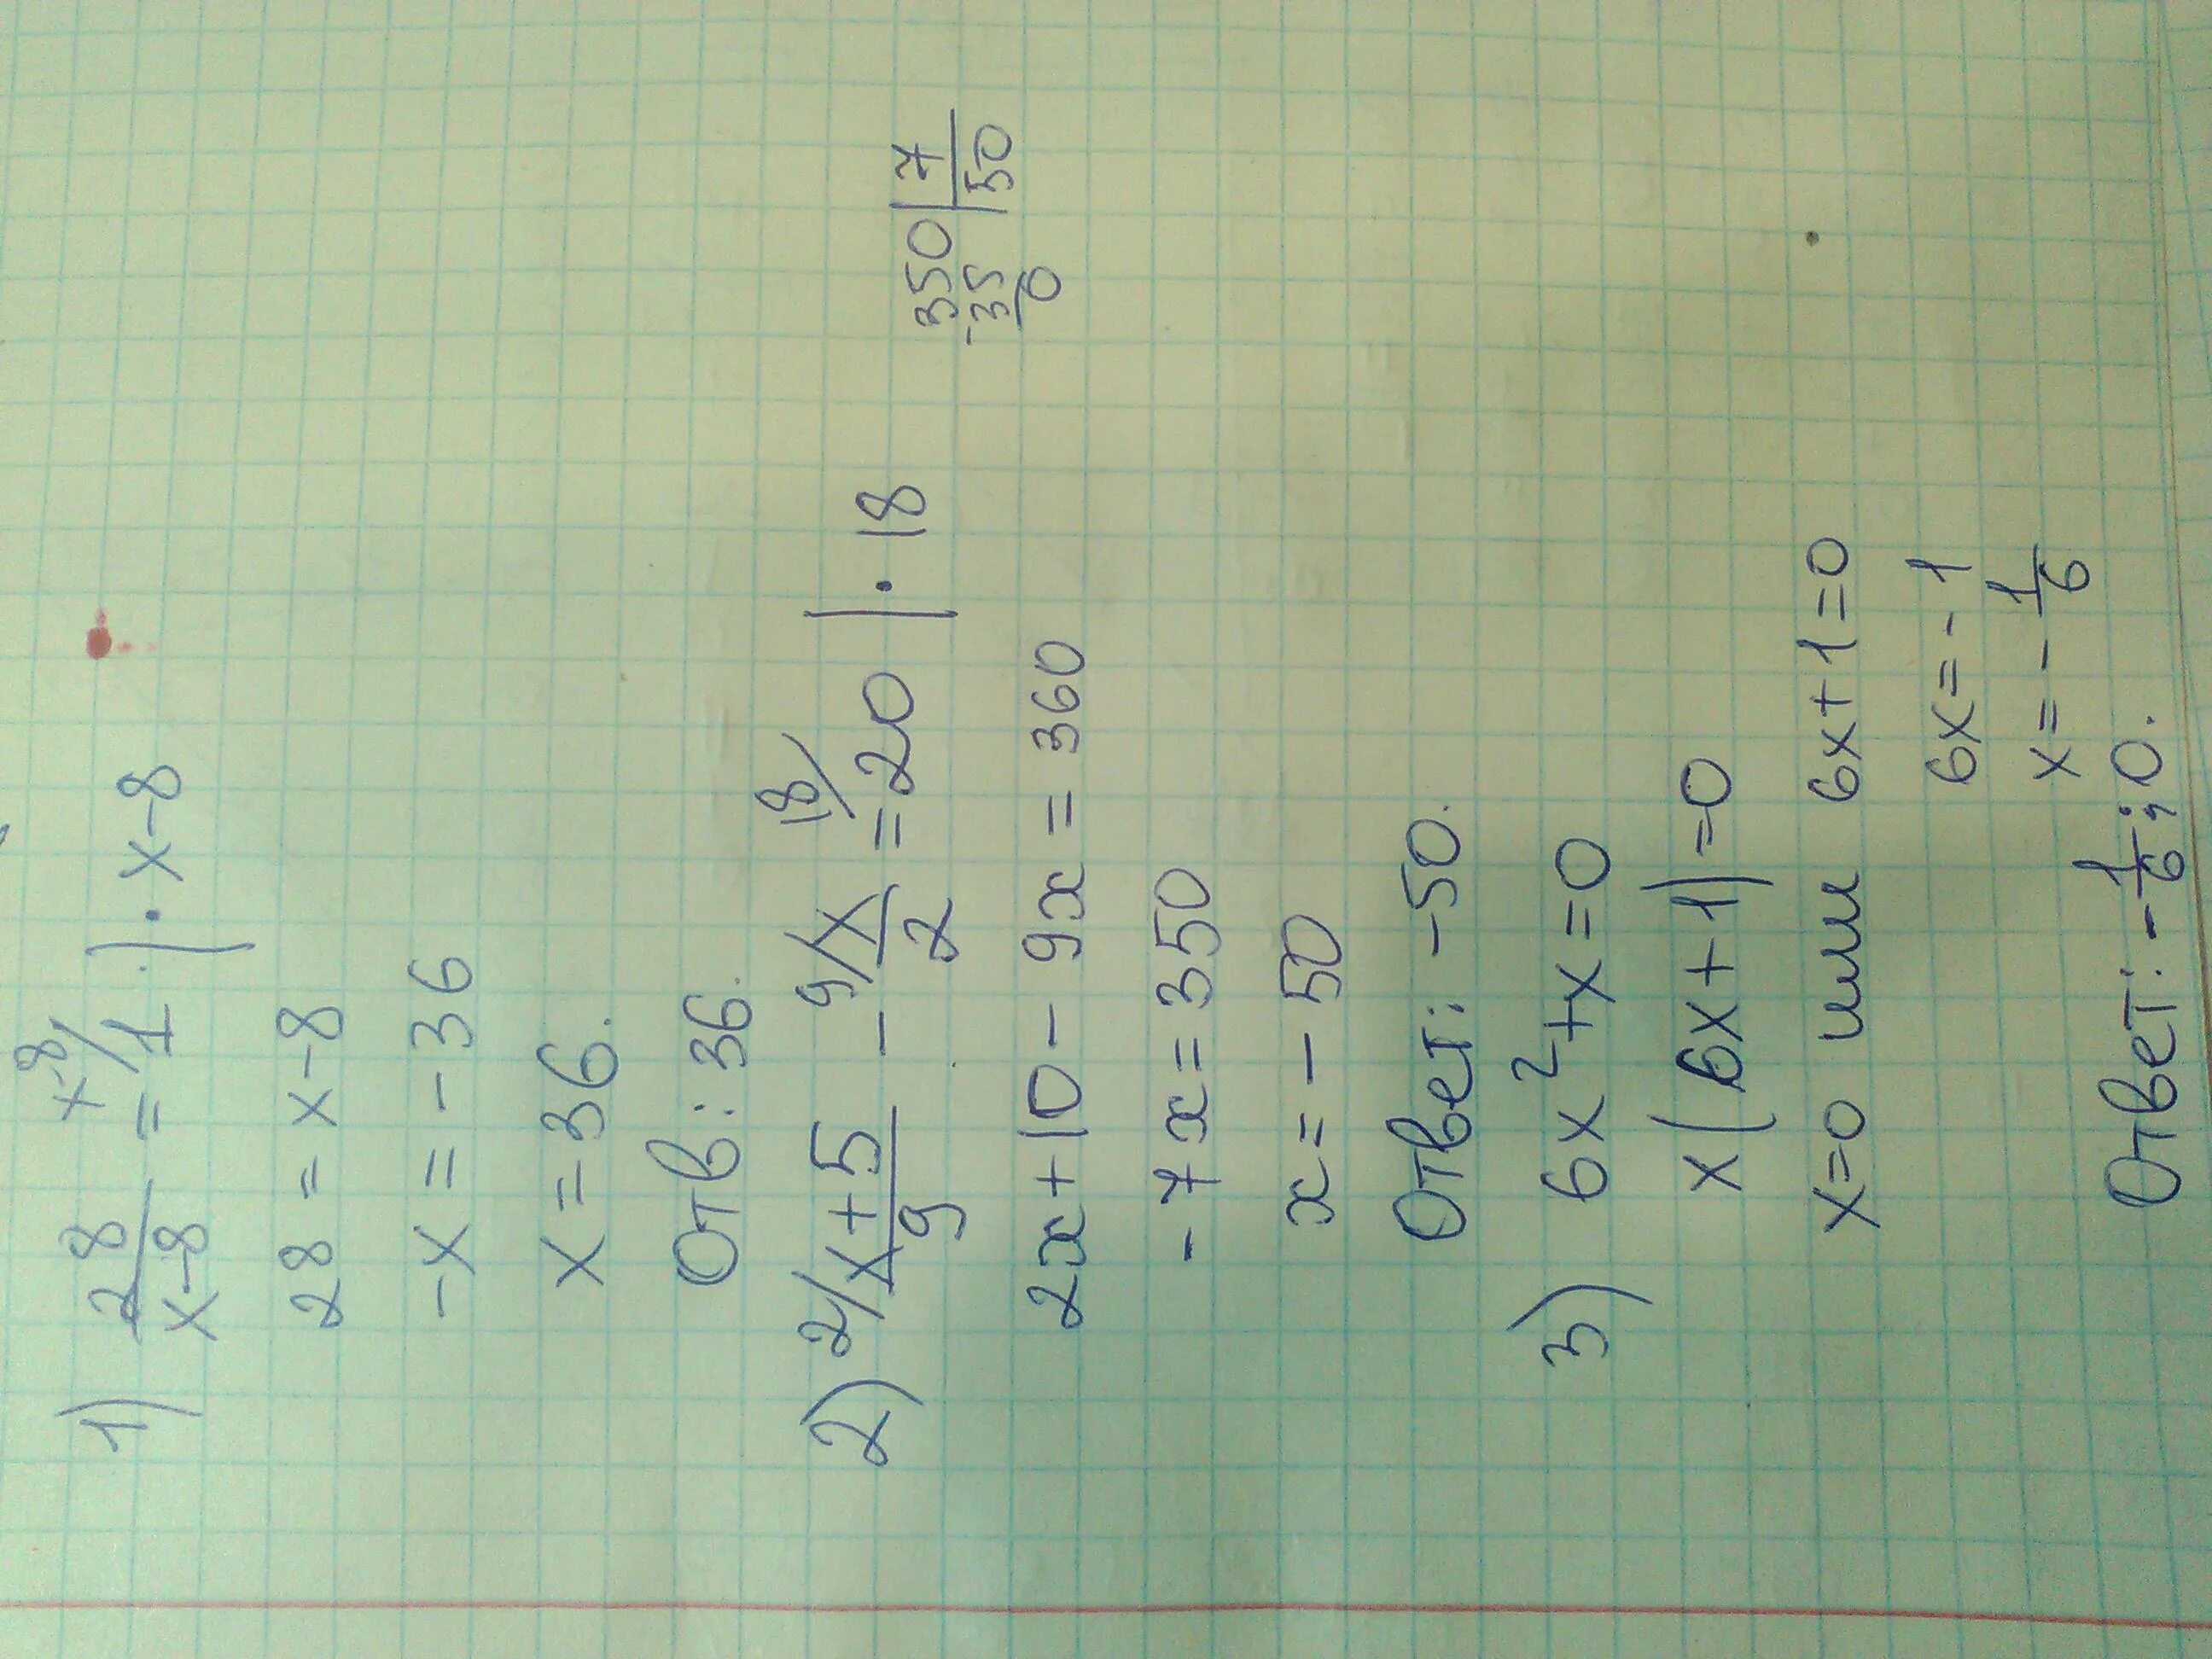 28 3 1 8 6 18 2. X2-9x+20 0. (X2-5x+2)(x2-5x-1)=28. 2x-3>3x+1. X2<9.